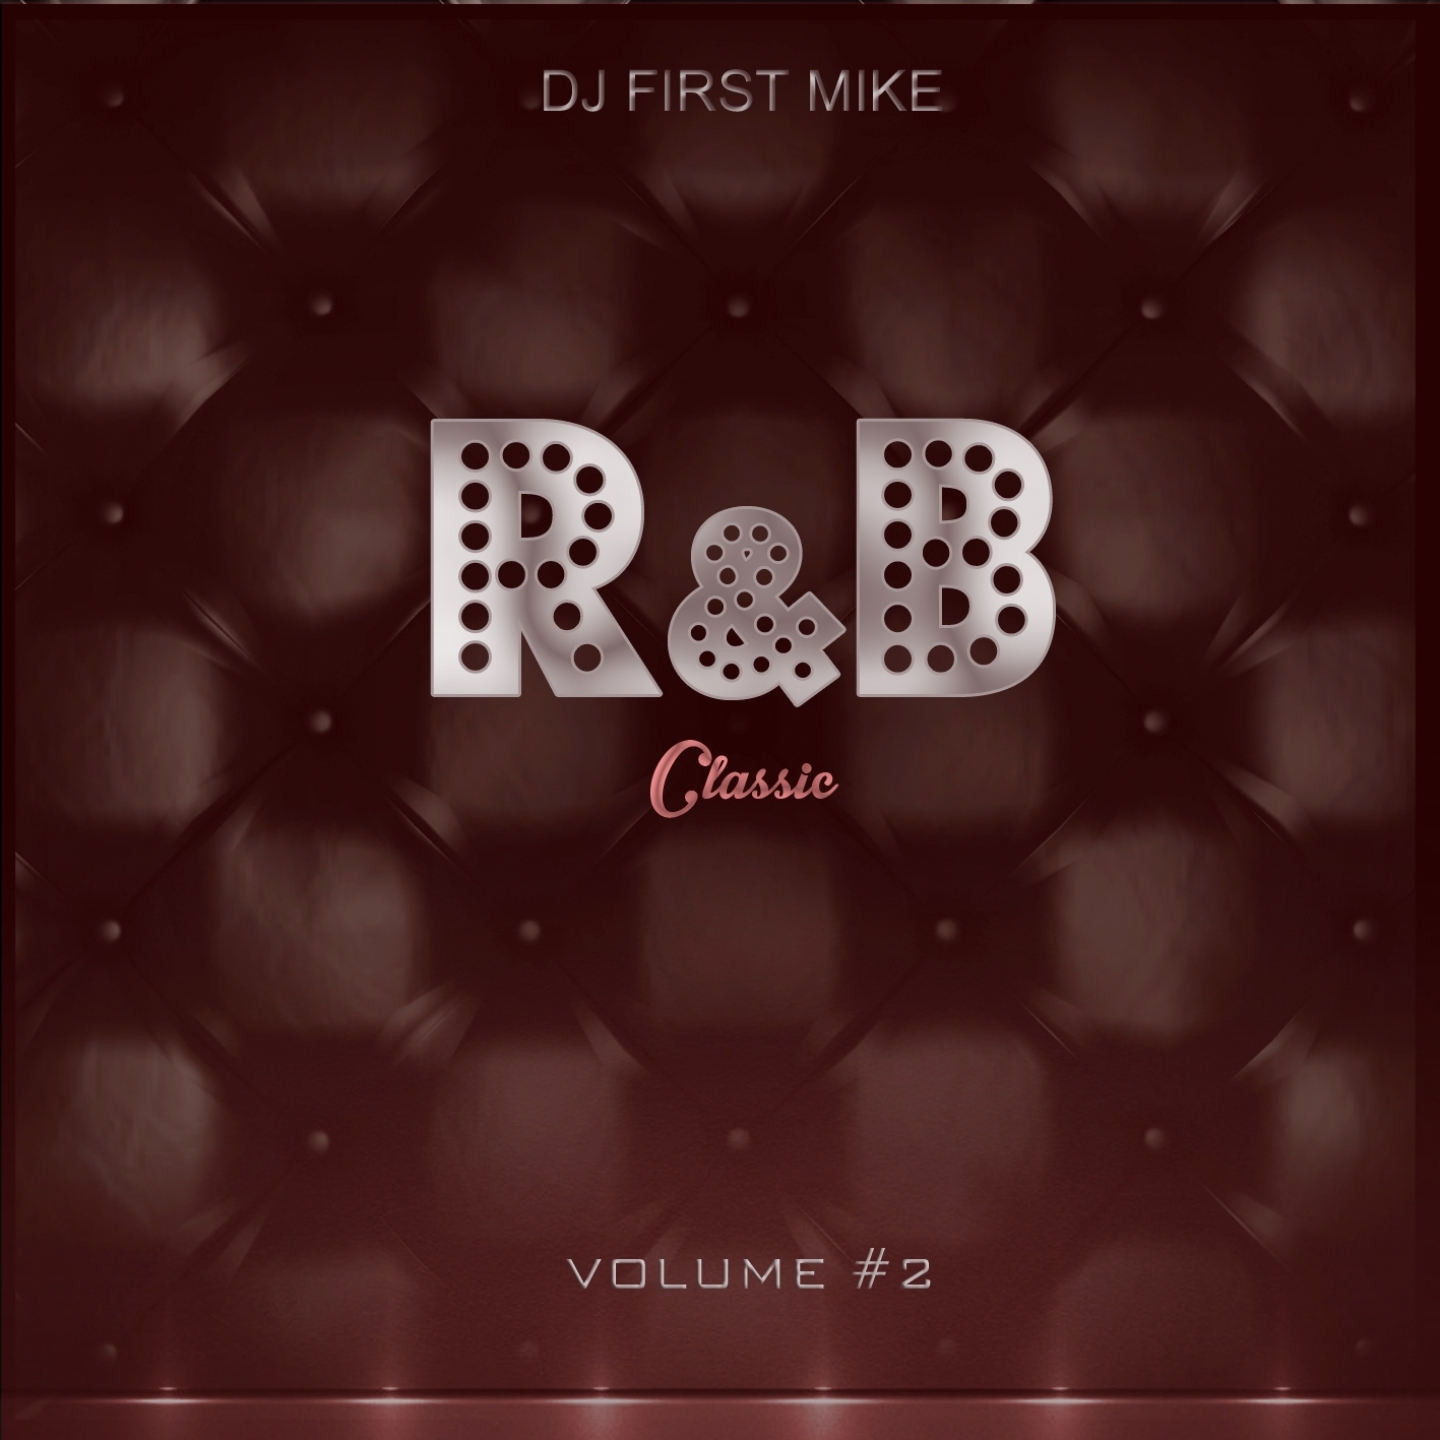 R&B Classic, Vol. 2